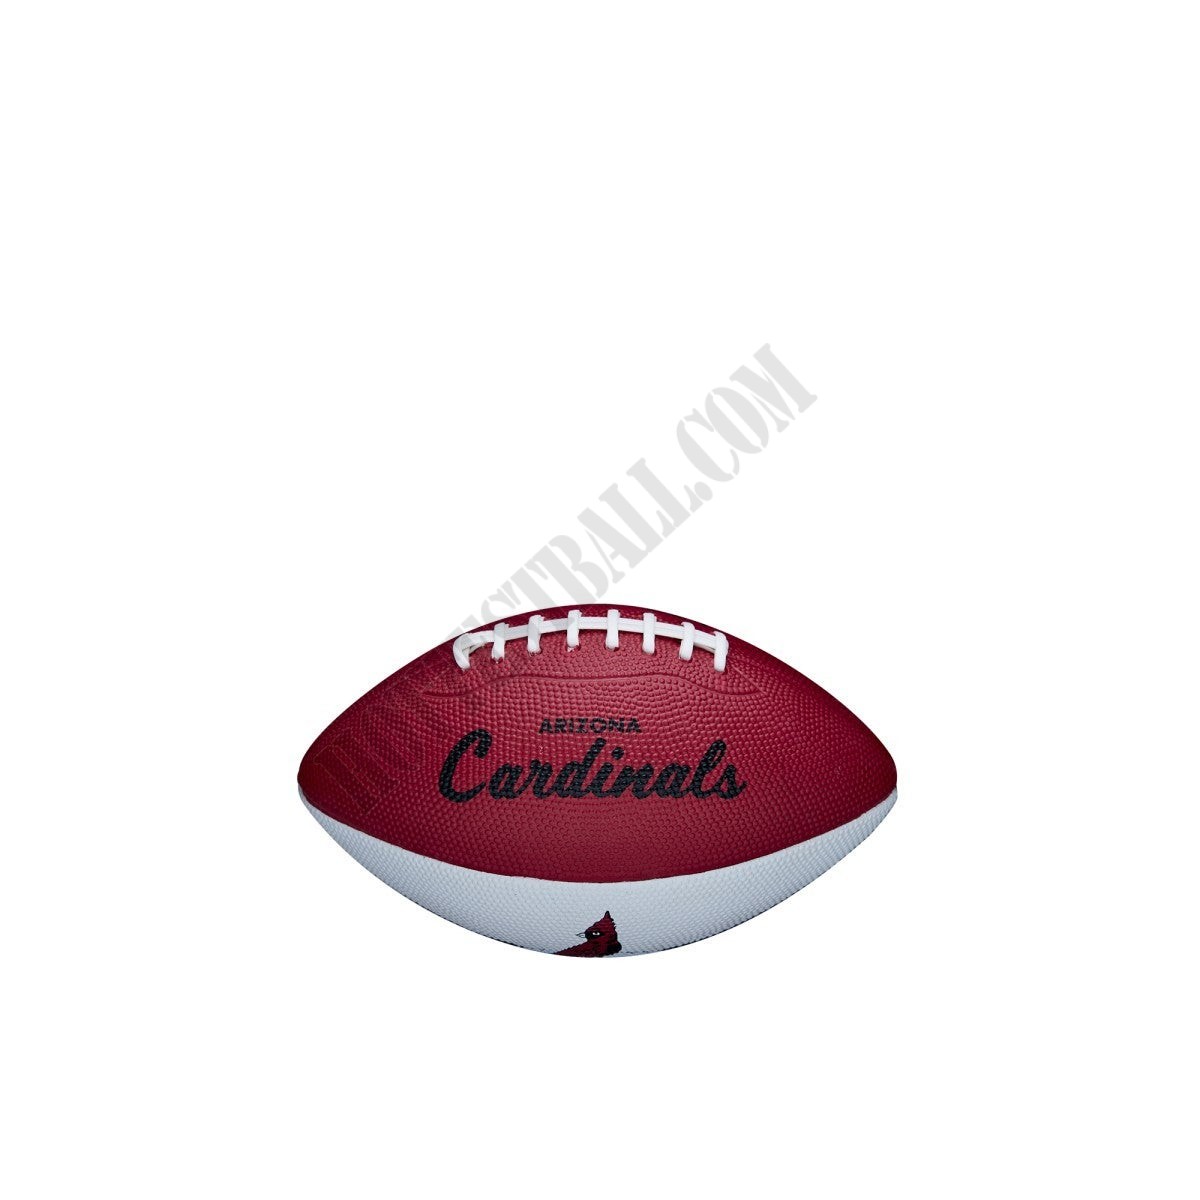 NFL Retro Mini Football - Arizona Cardinals ● Wilson Promotions - NFL Retro Mini Football - Arizona Cardinals ● Wilson Promotions